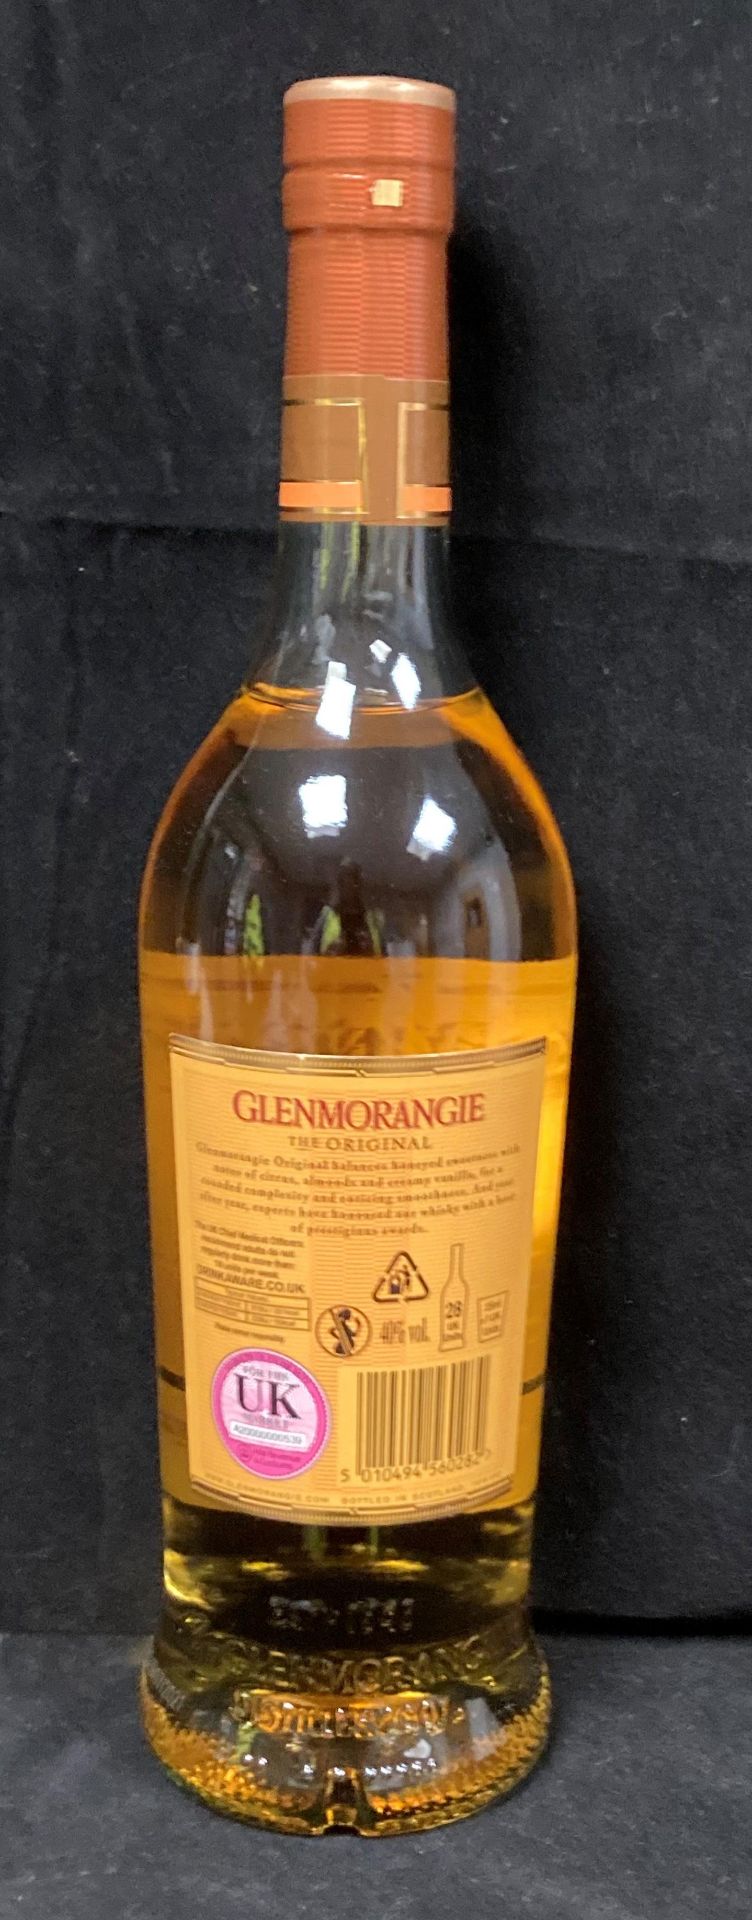 A 70cl bottle of Glenmorangie The Original Aged ten years Highland Single Malt Scotch Whisky 40% - Image 2 of 2